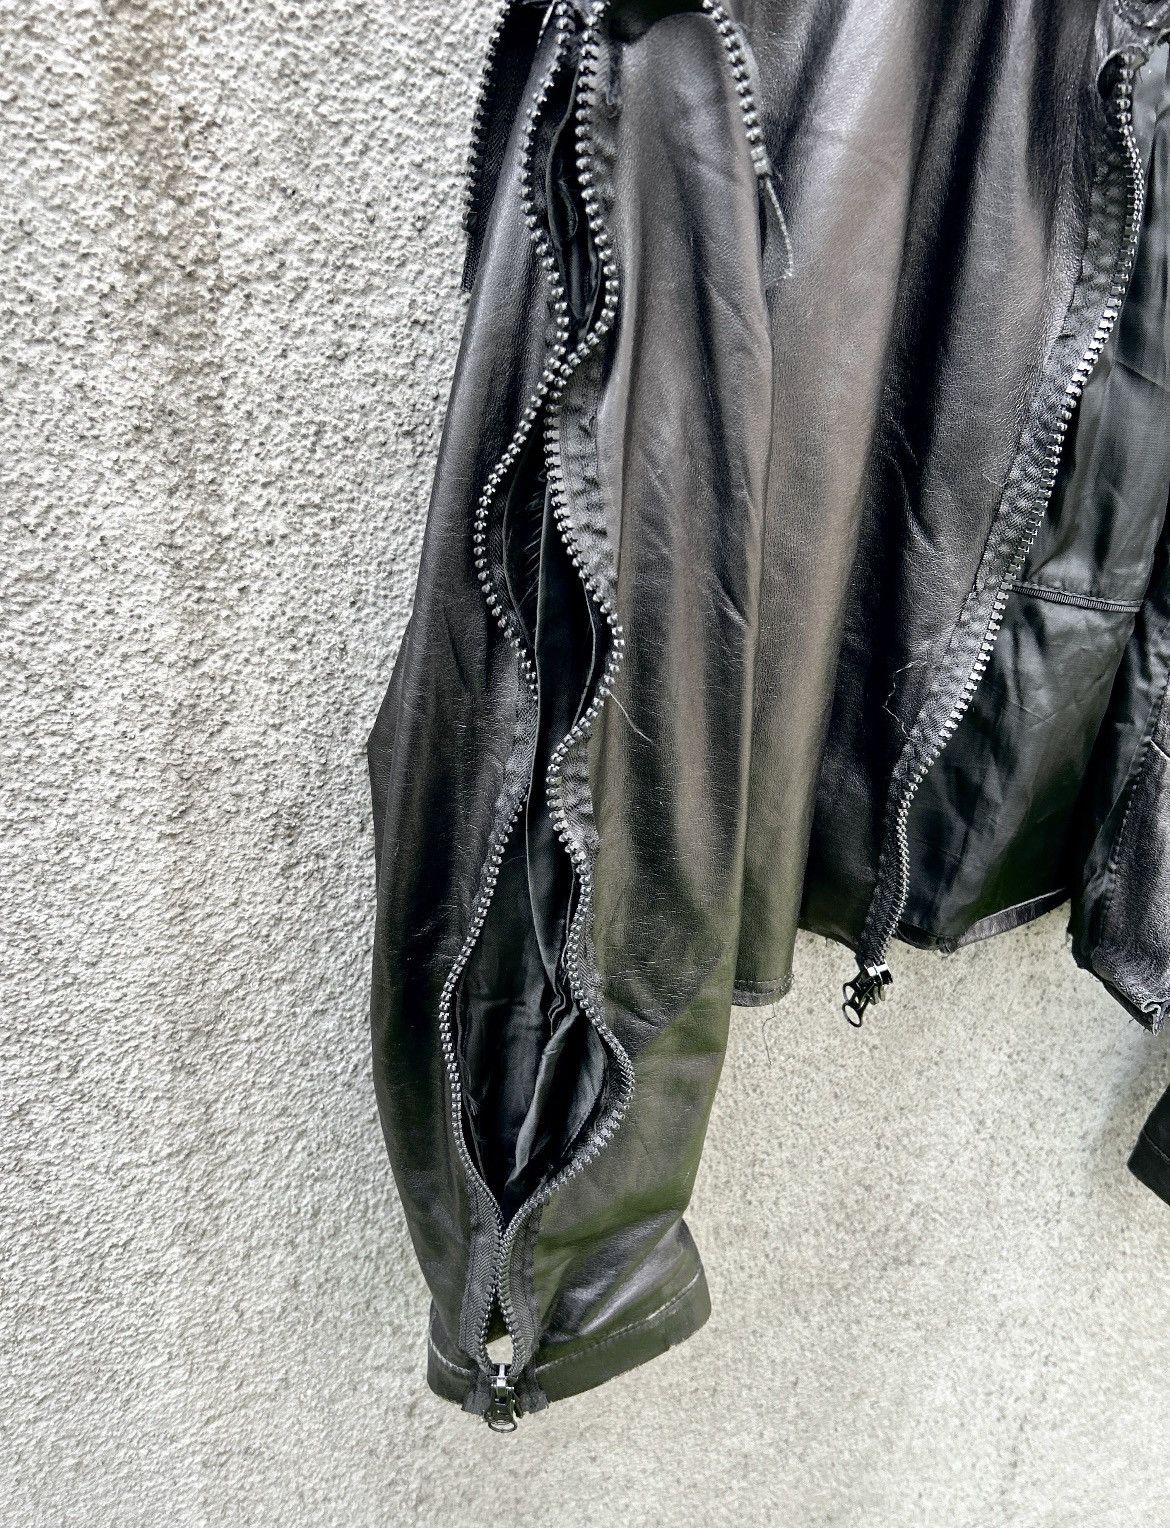 Vintage Avant Garde Archival Clothing Cropped Zip Up Leather Jacket Size US L / EU 52-54 / 3 - 7 Thumbnail